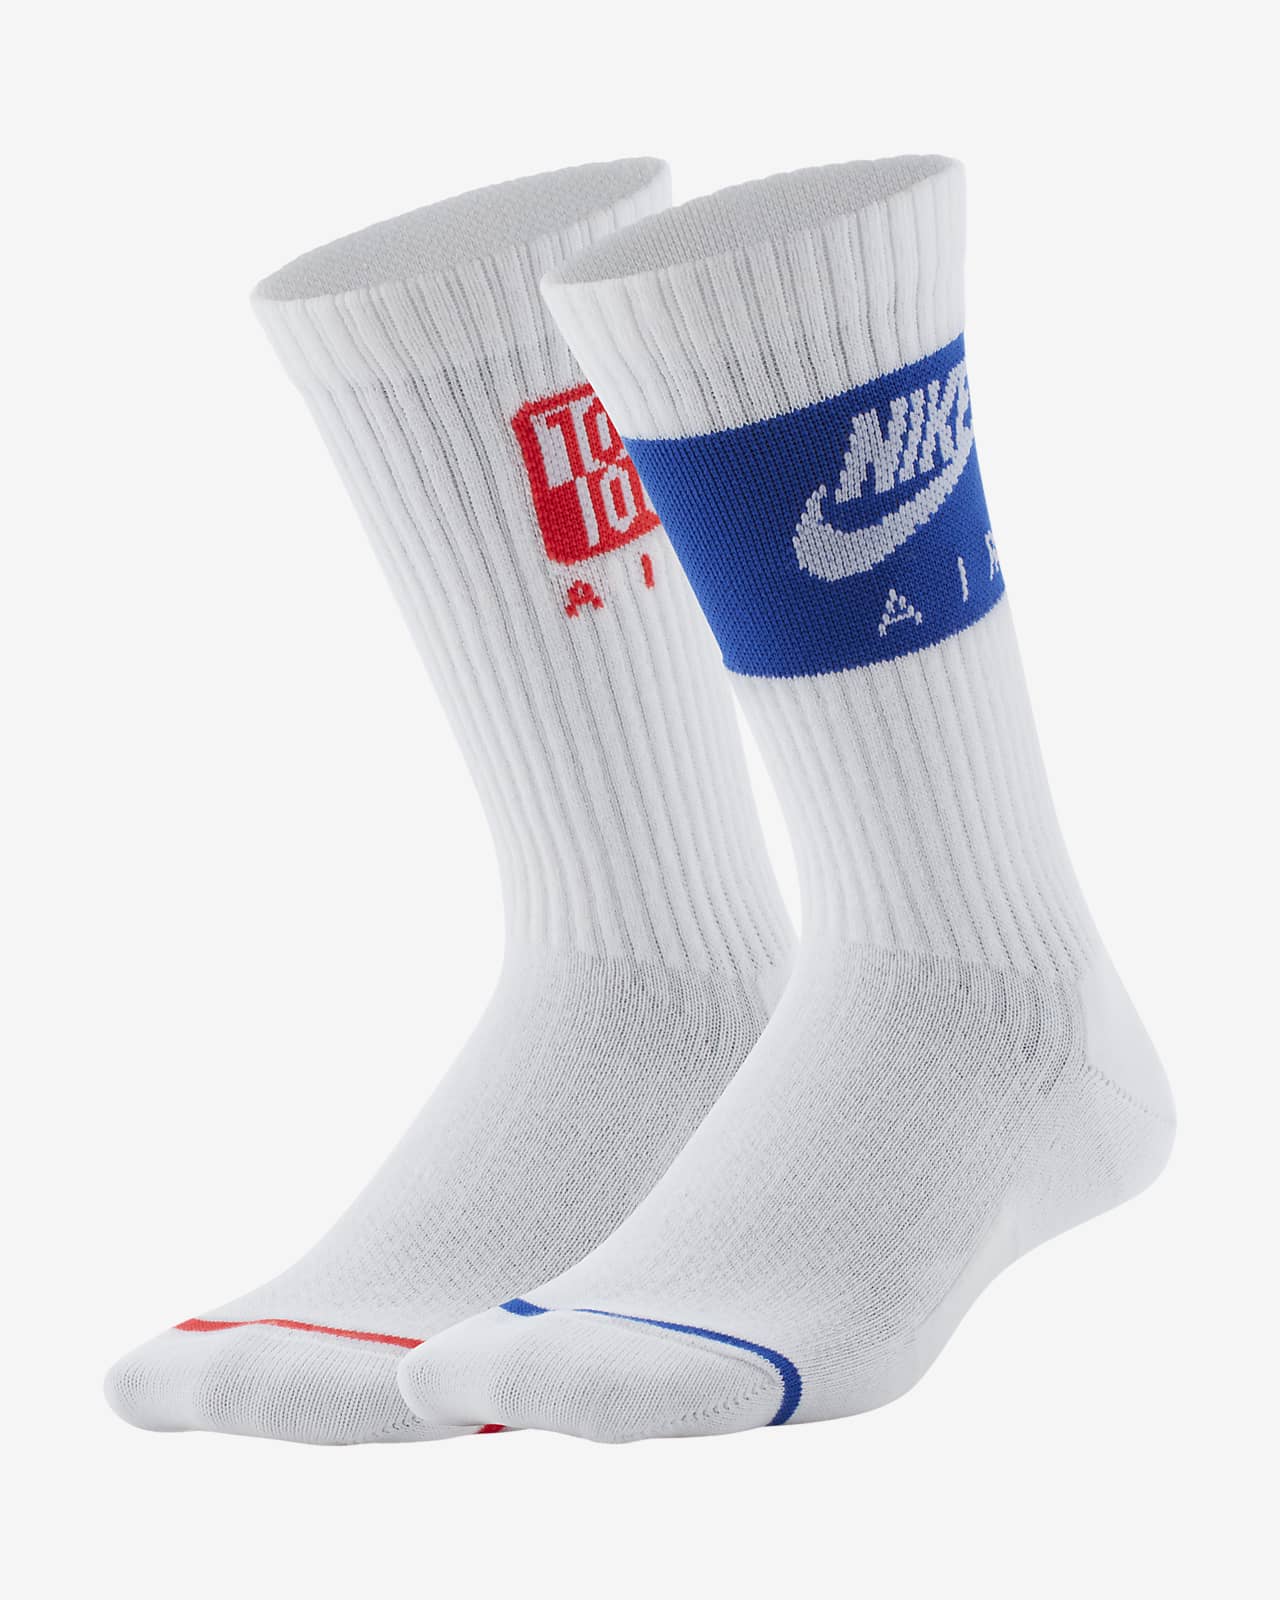 Nike Swoosh Lightweight Big Kids' Crew Socks (2 Pairs)